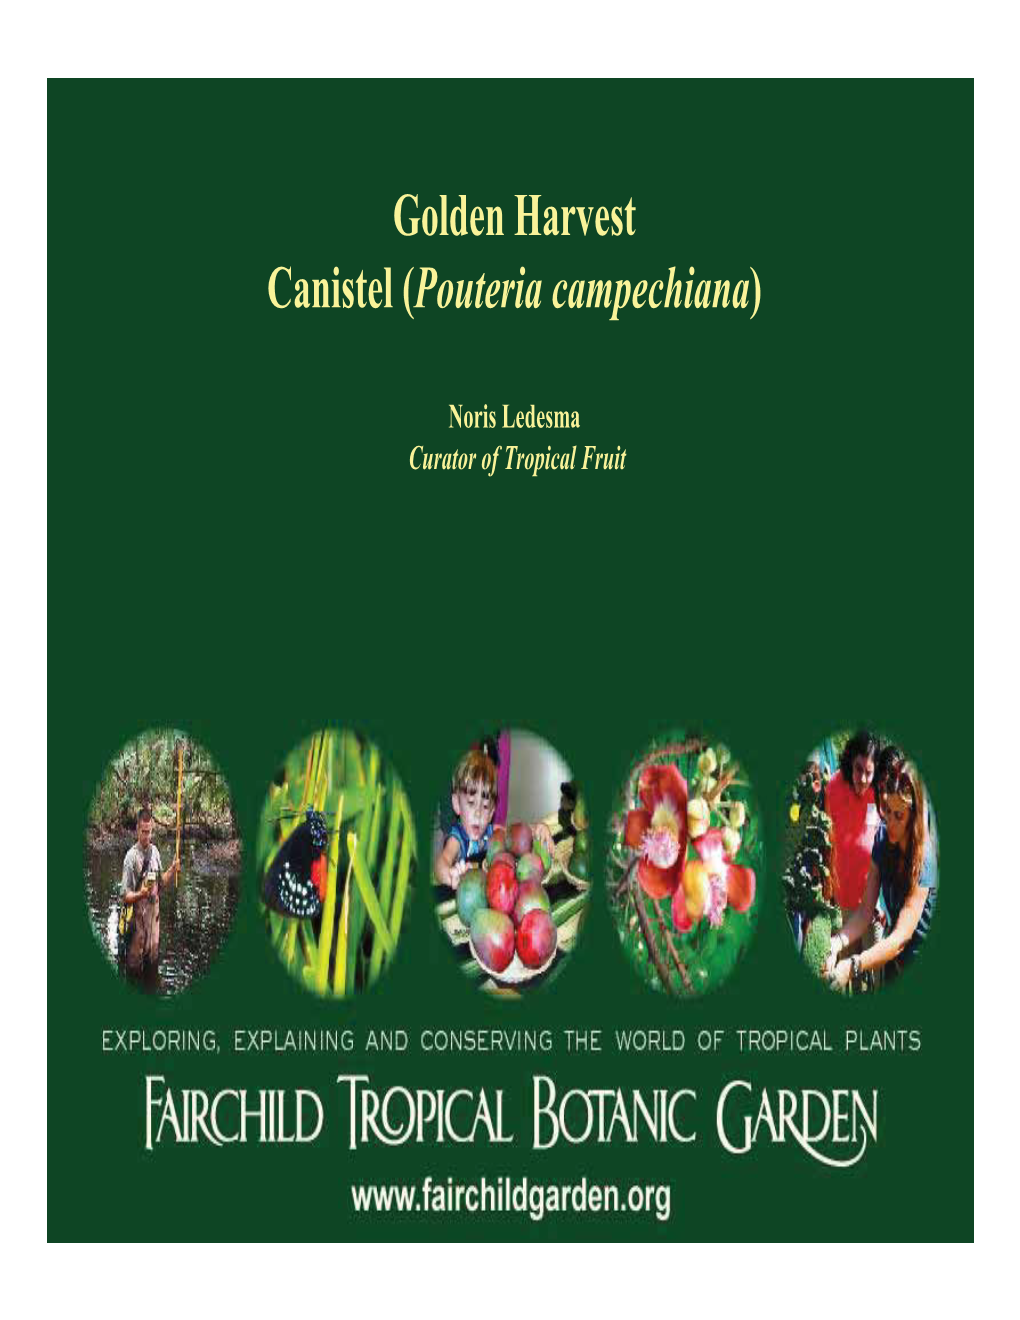 Golden Harvest Canistel (Pouteria Campechiana)